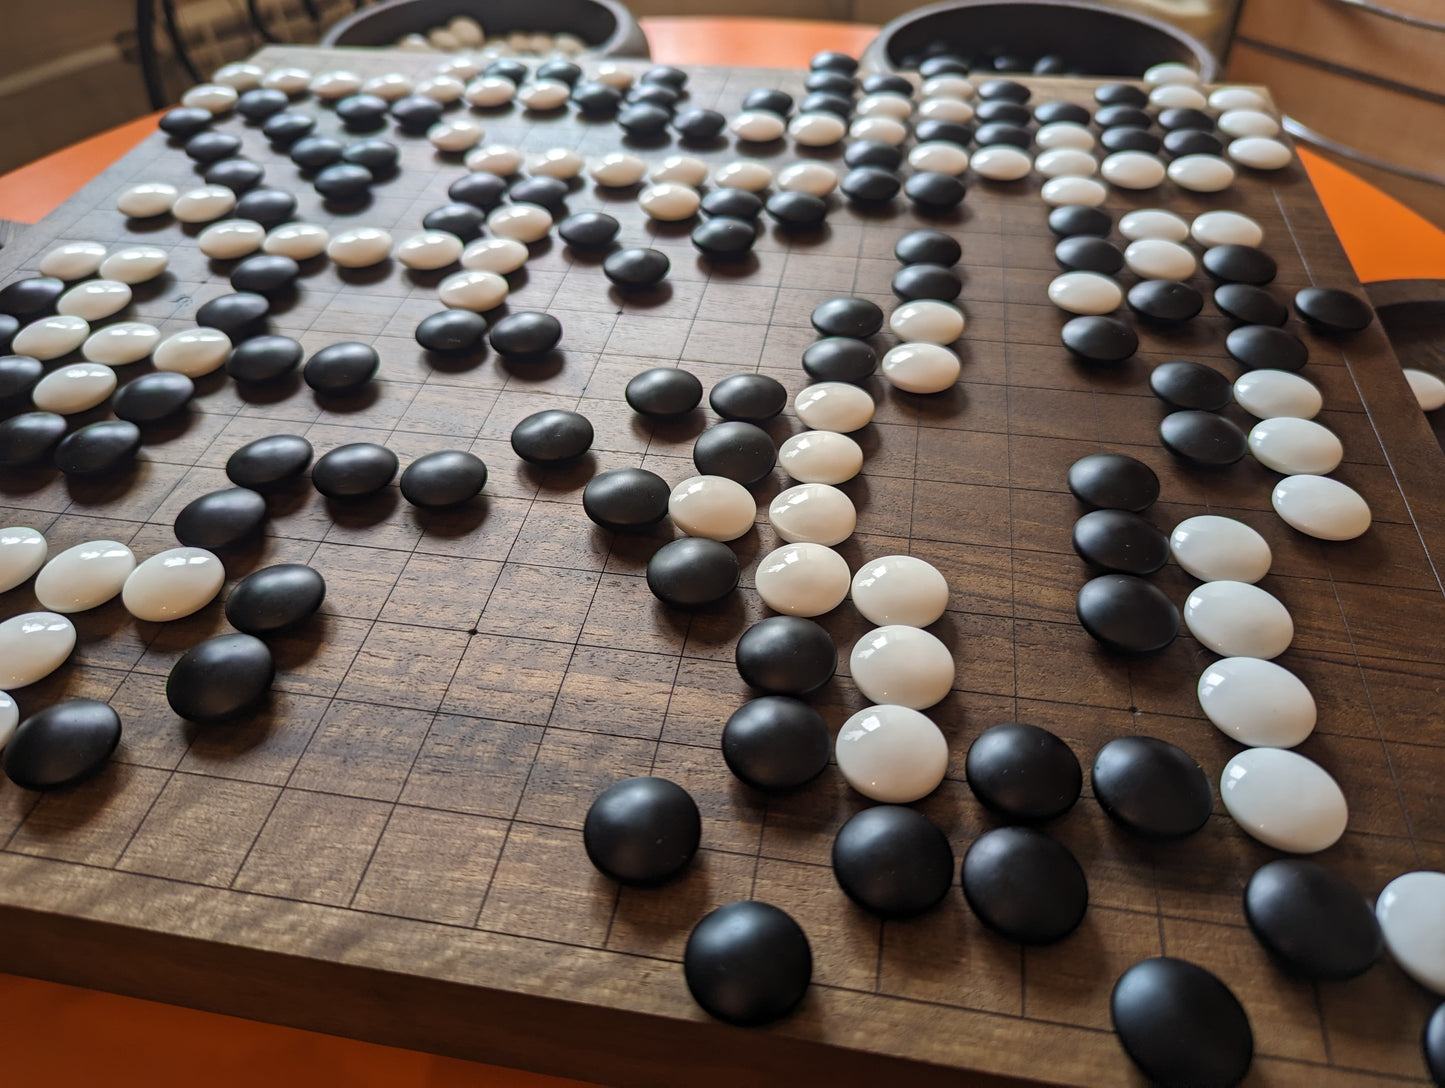 Game Go set 19x19 solid walnut hand carved game Go board. Hardwood board